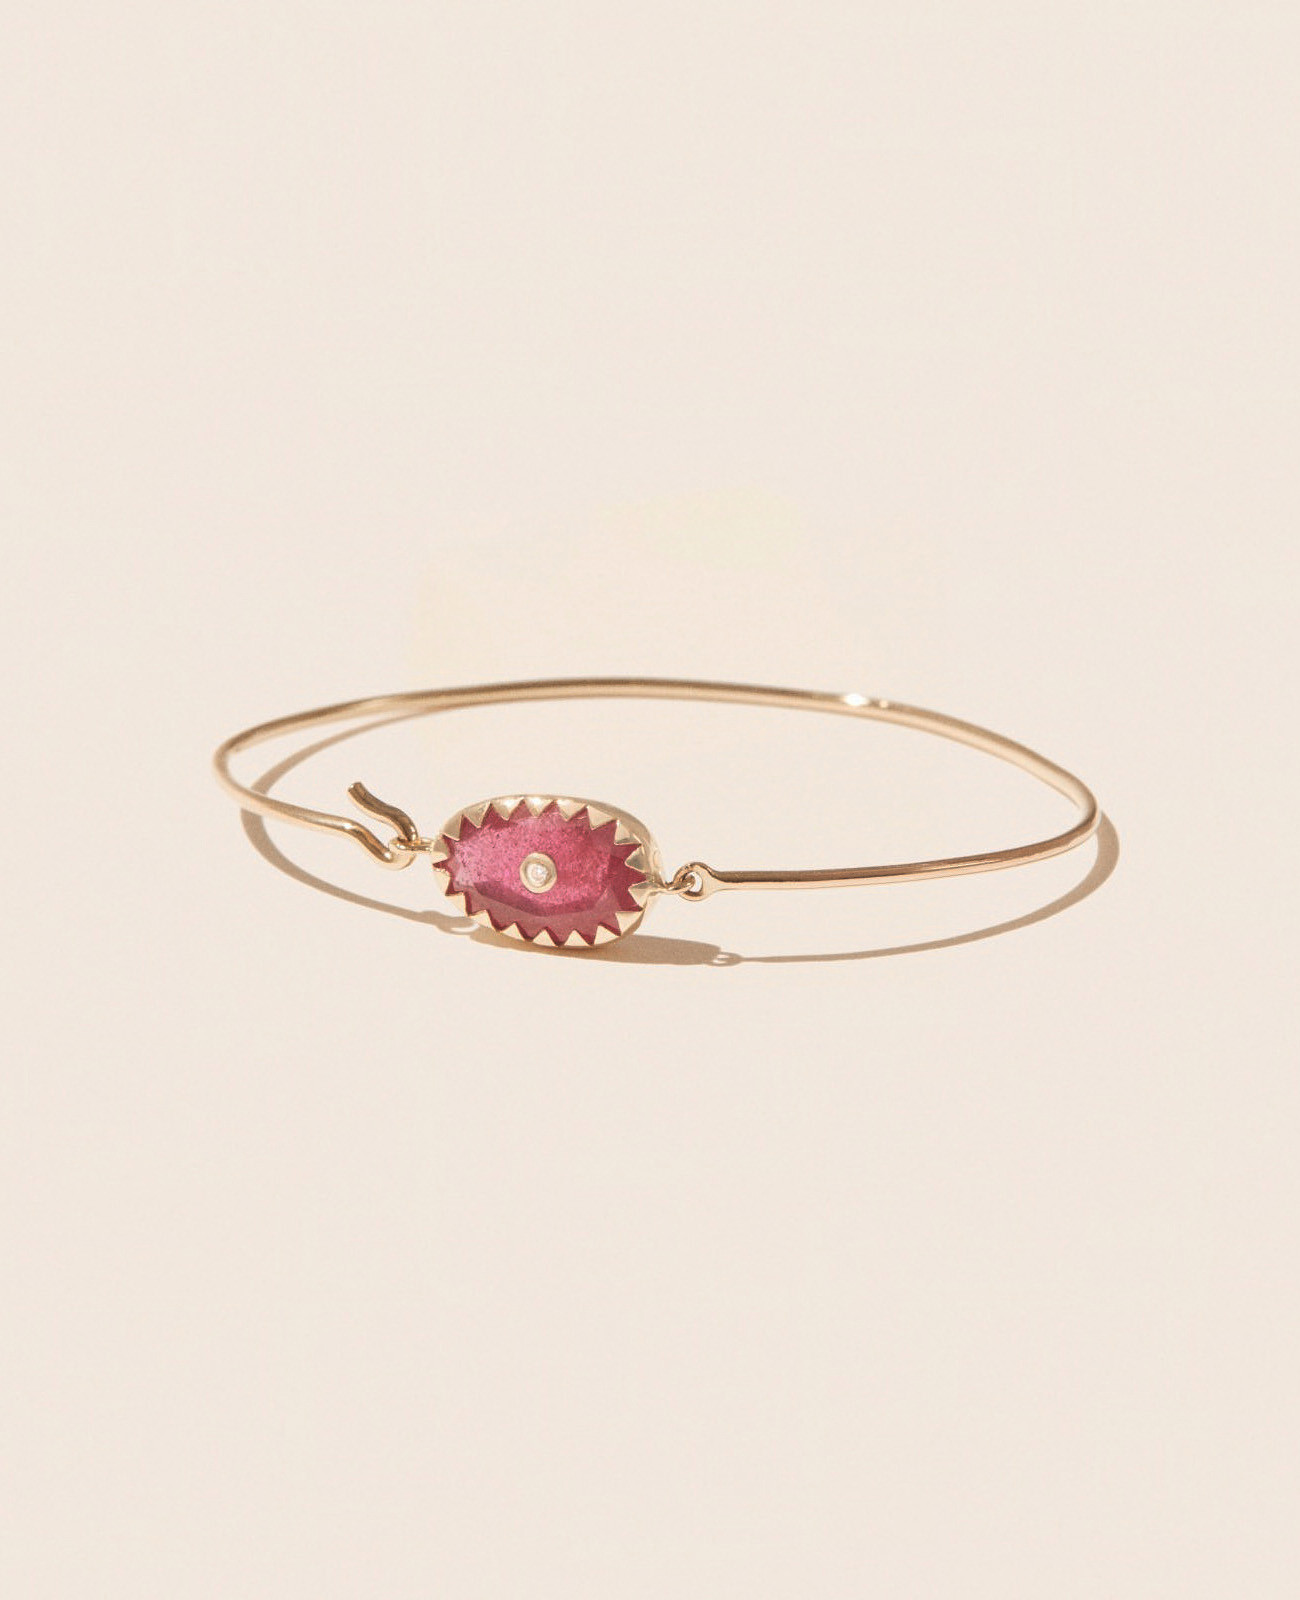 ORSO RUBY bracelet pascale monvoisin jewelry paris